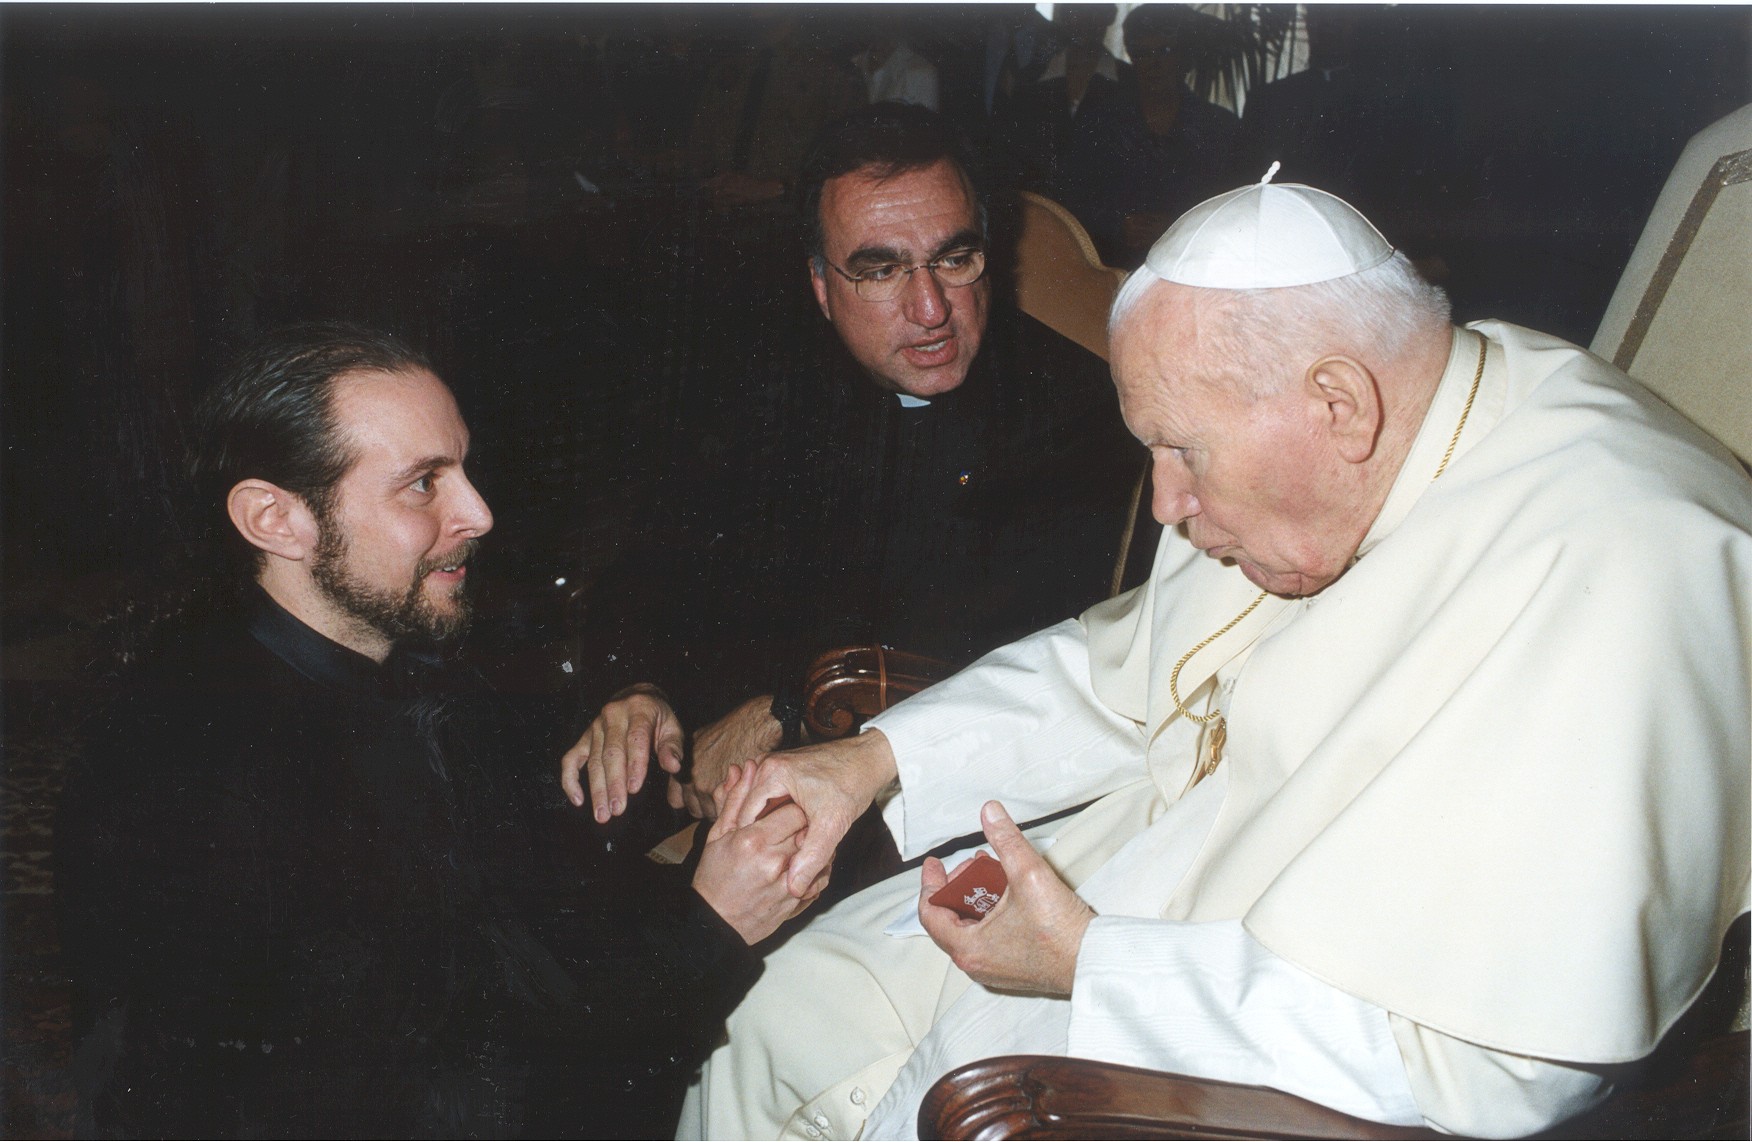 With Pope John Paul II in Rome in 2003.